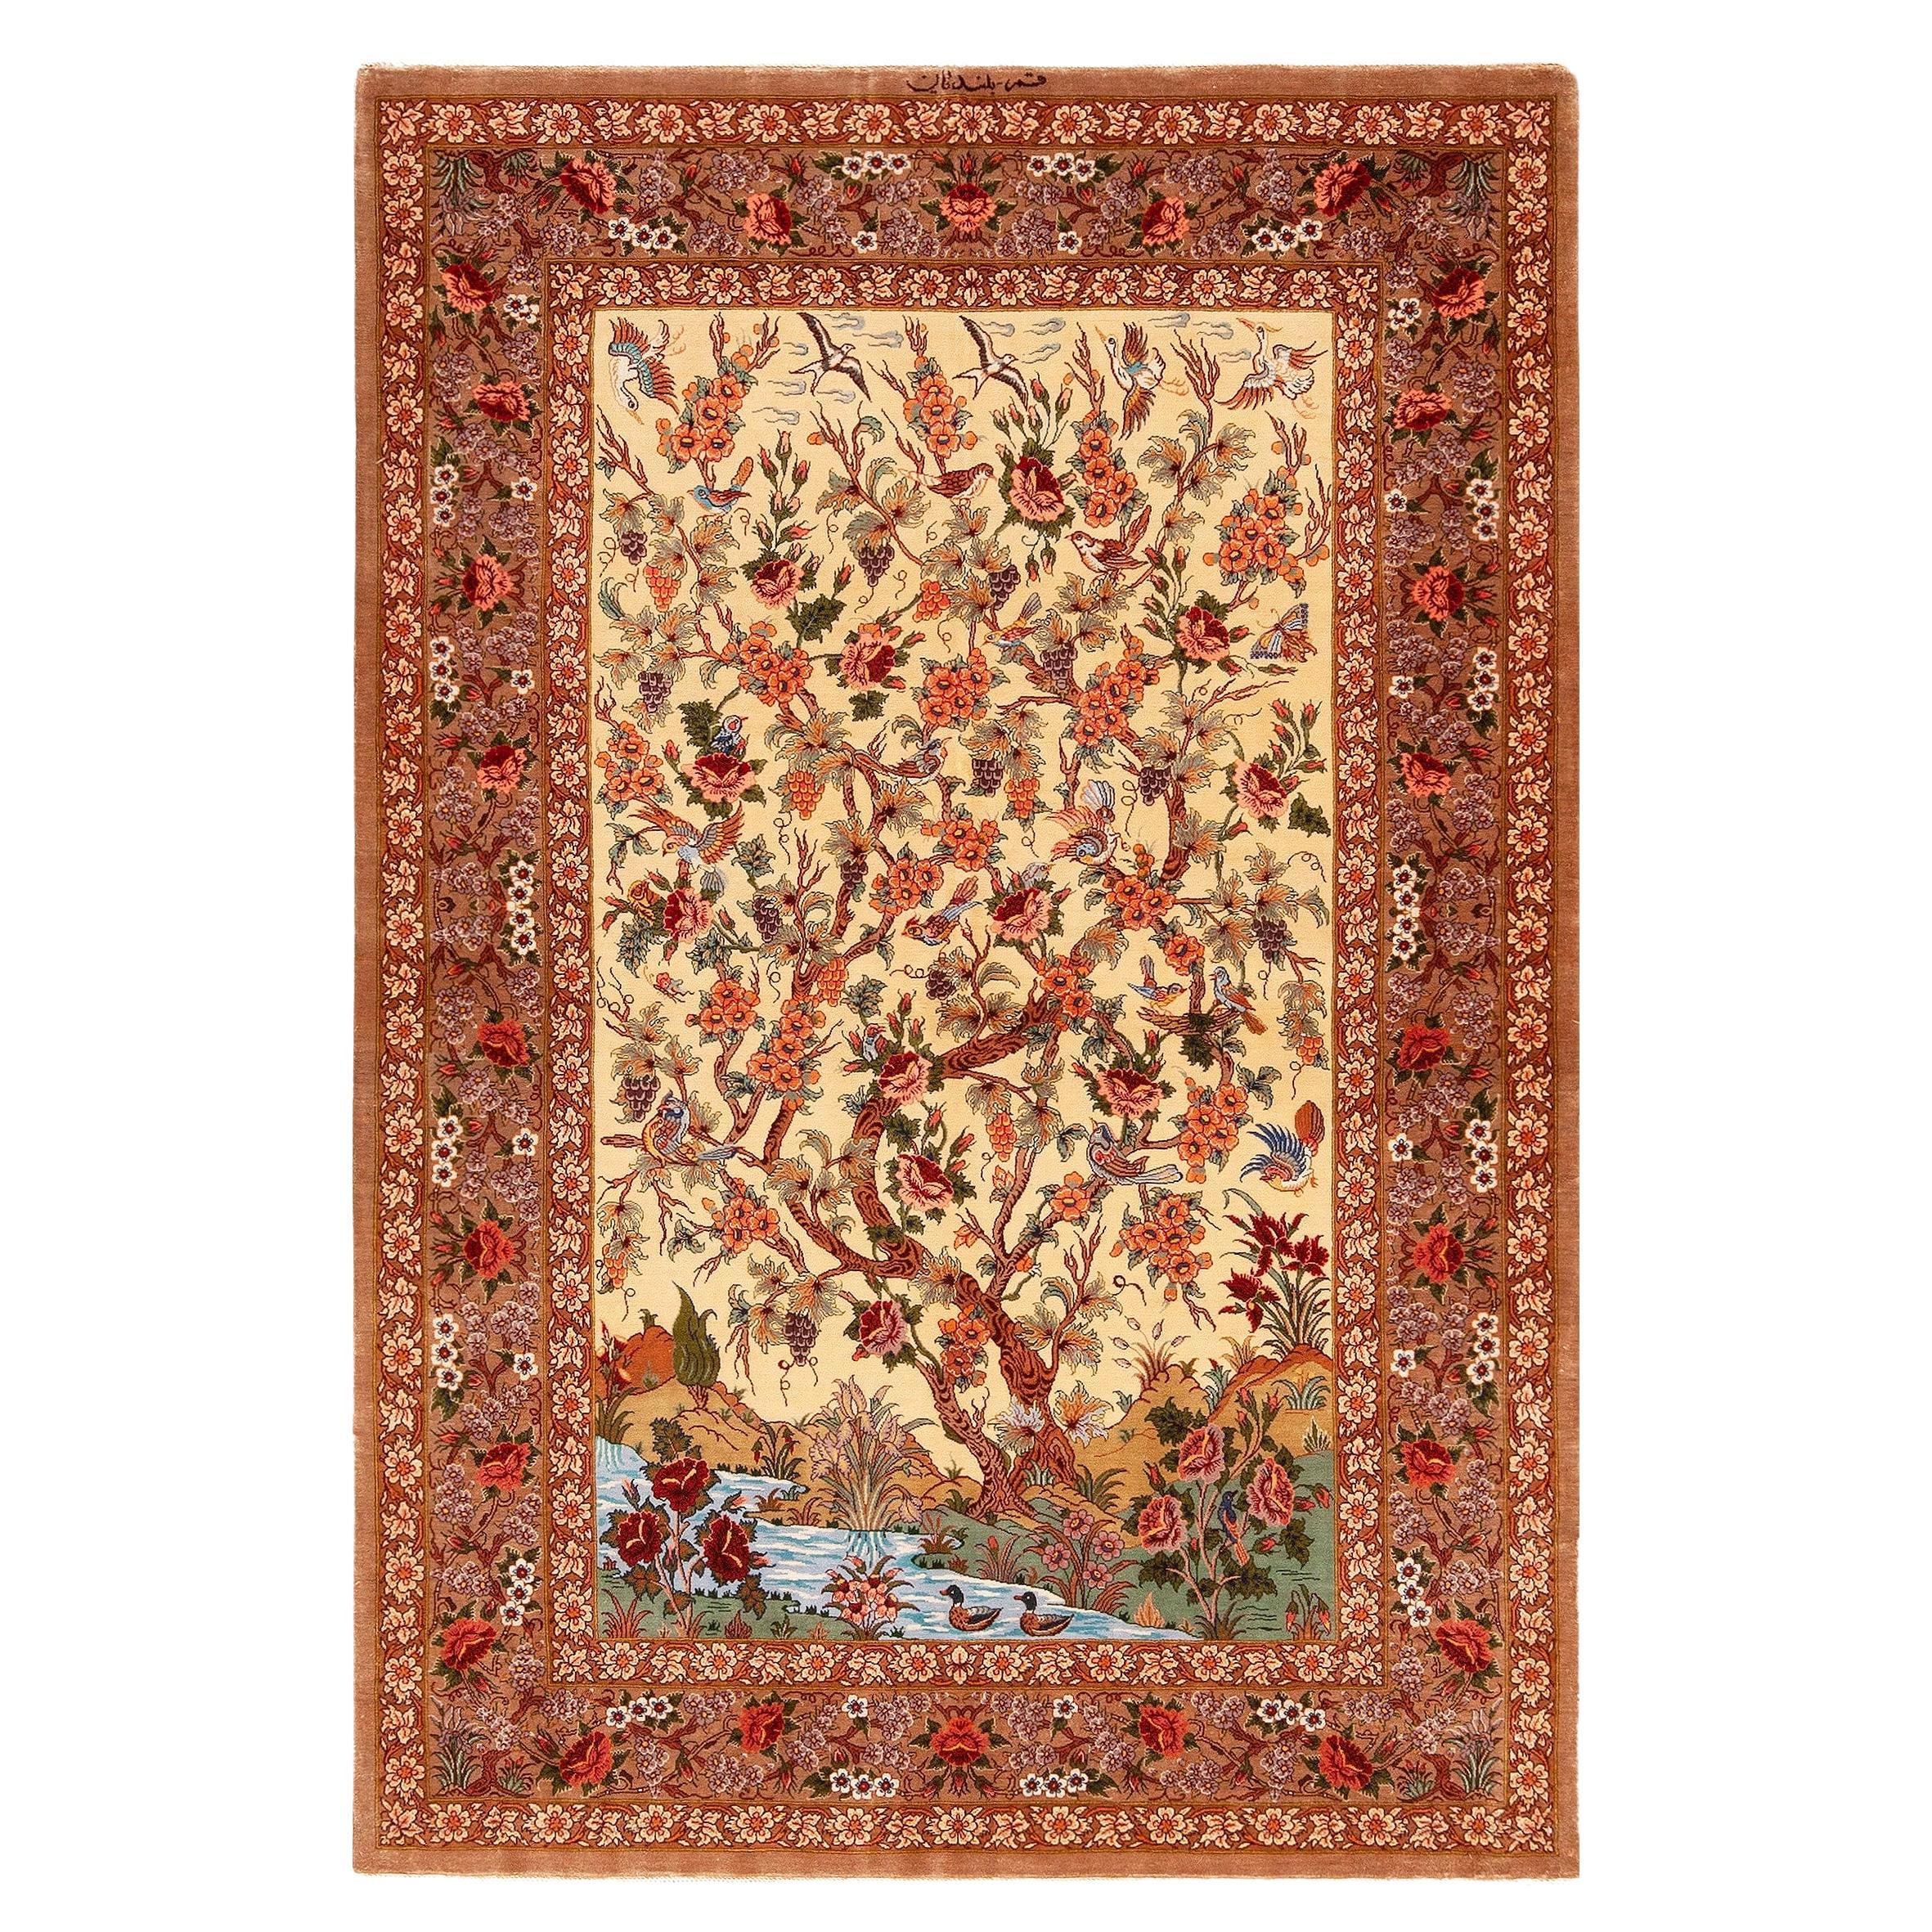 Artful Small Artistic Tree of Life Vintage Persian Silk Qum Luxury 3'5" x 5'